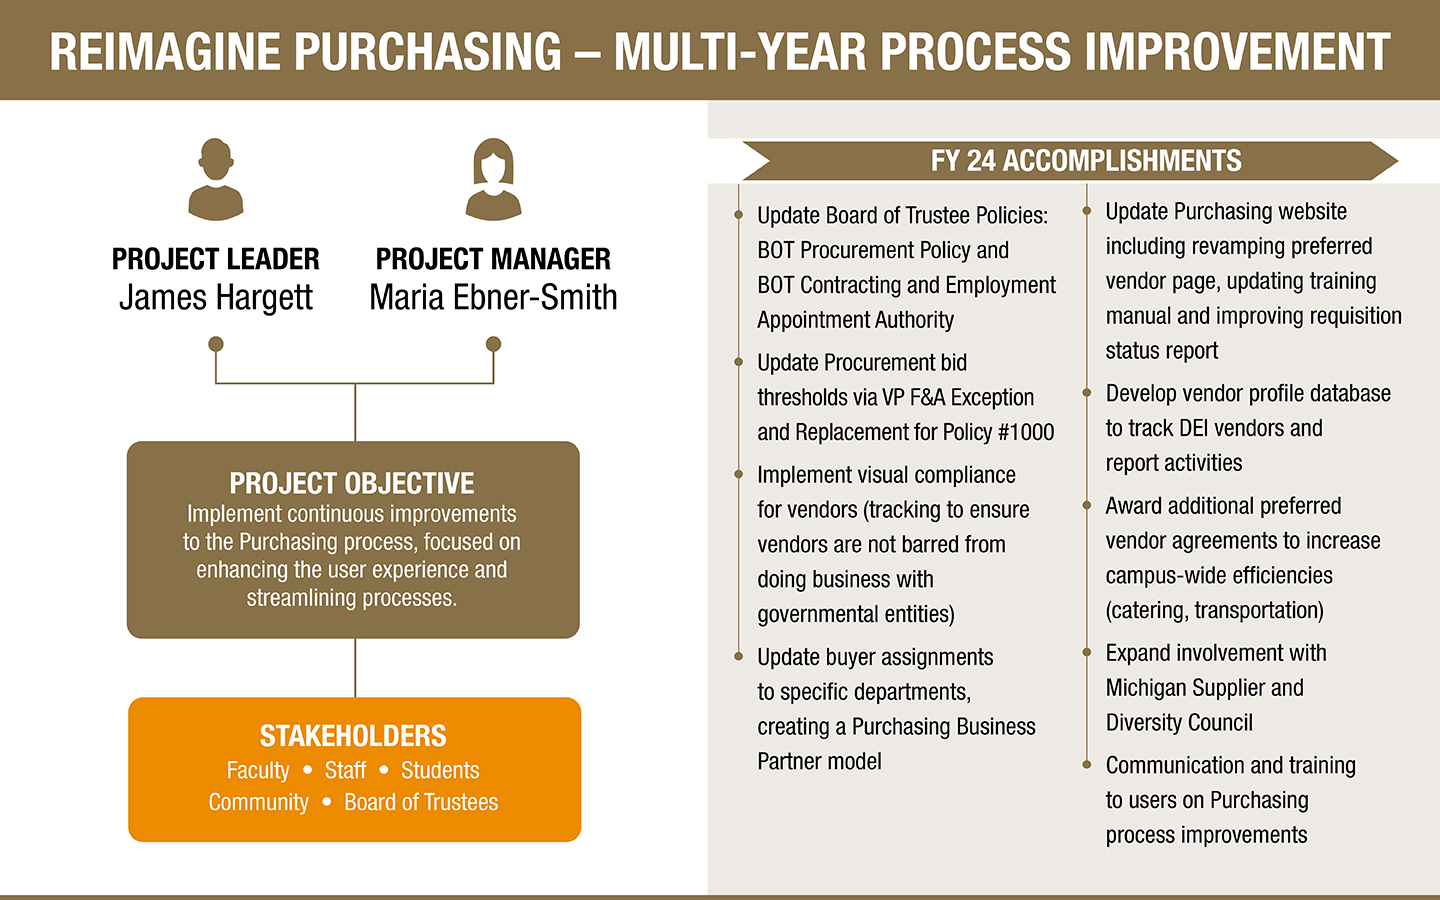 Reimagine Purchasing FY24 infographic. Text description follows the graphic.